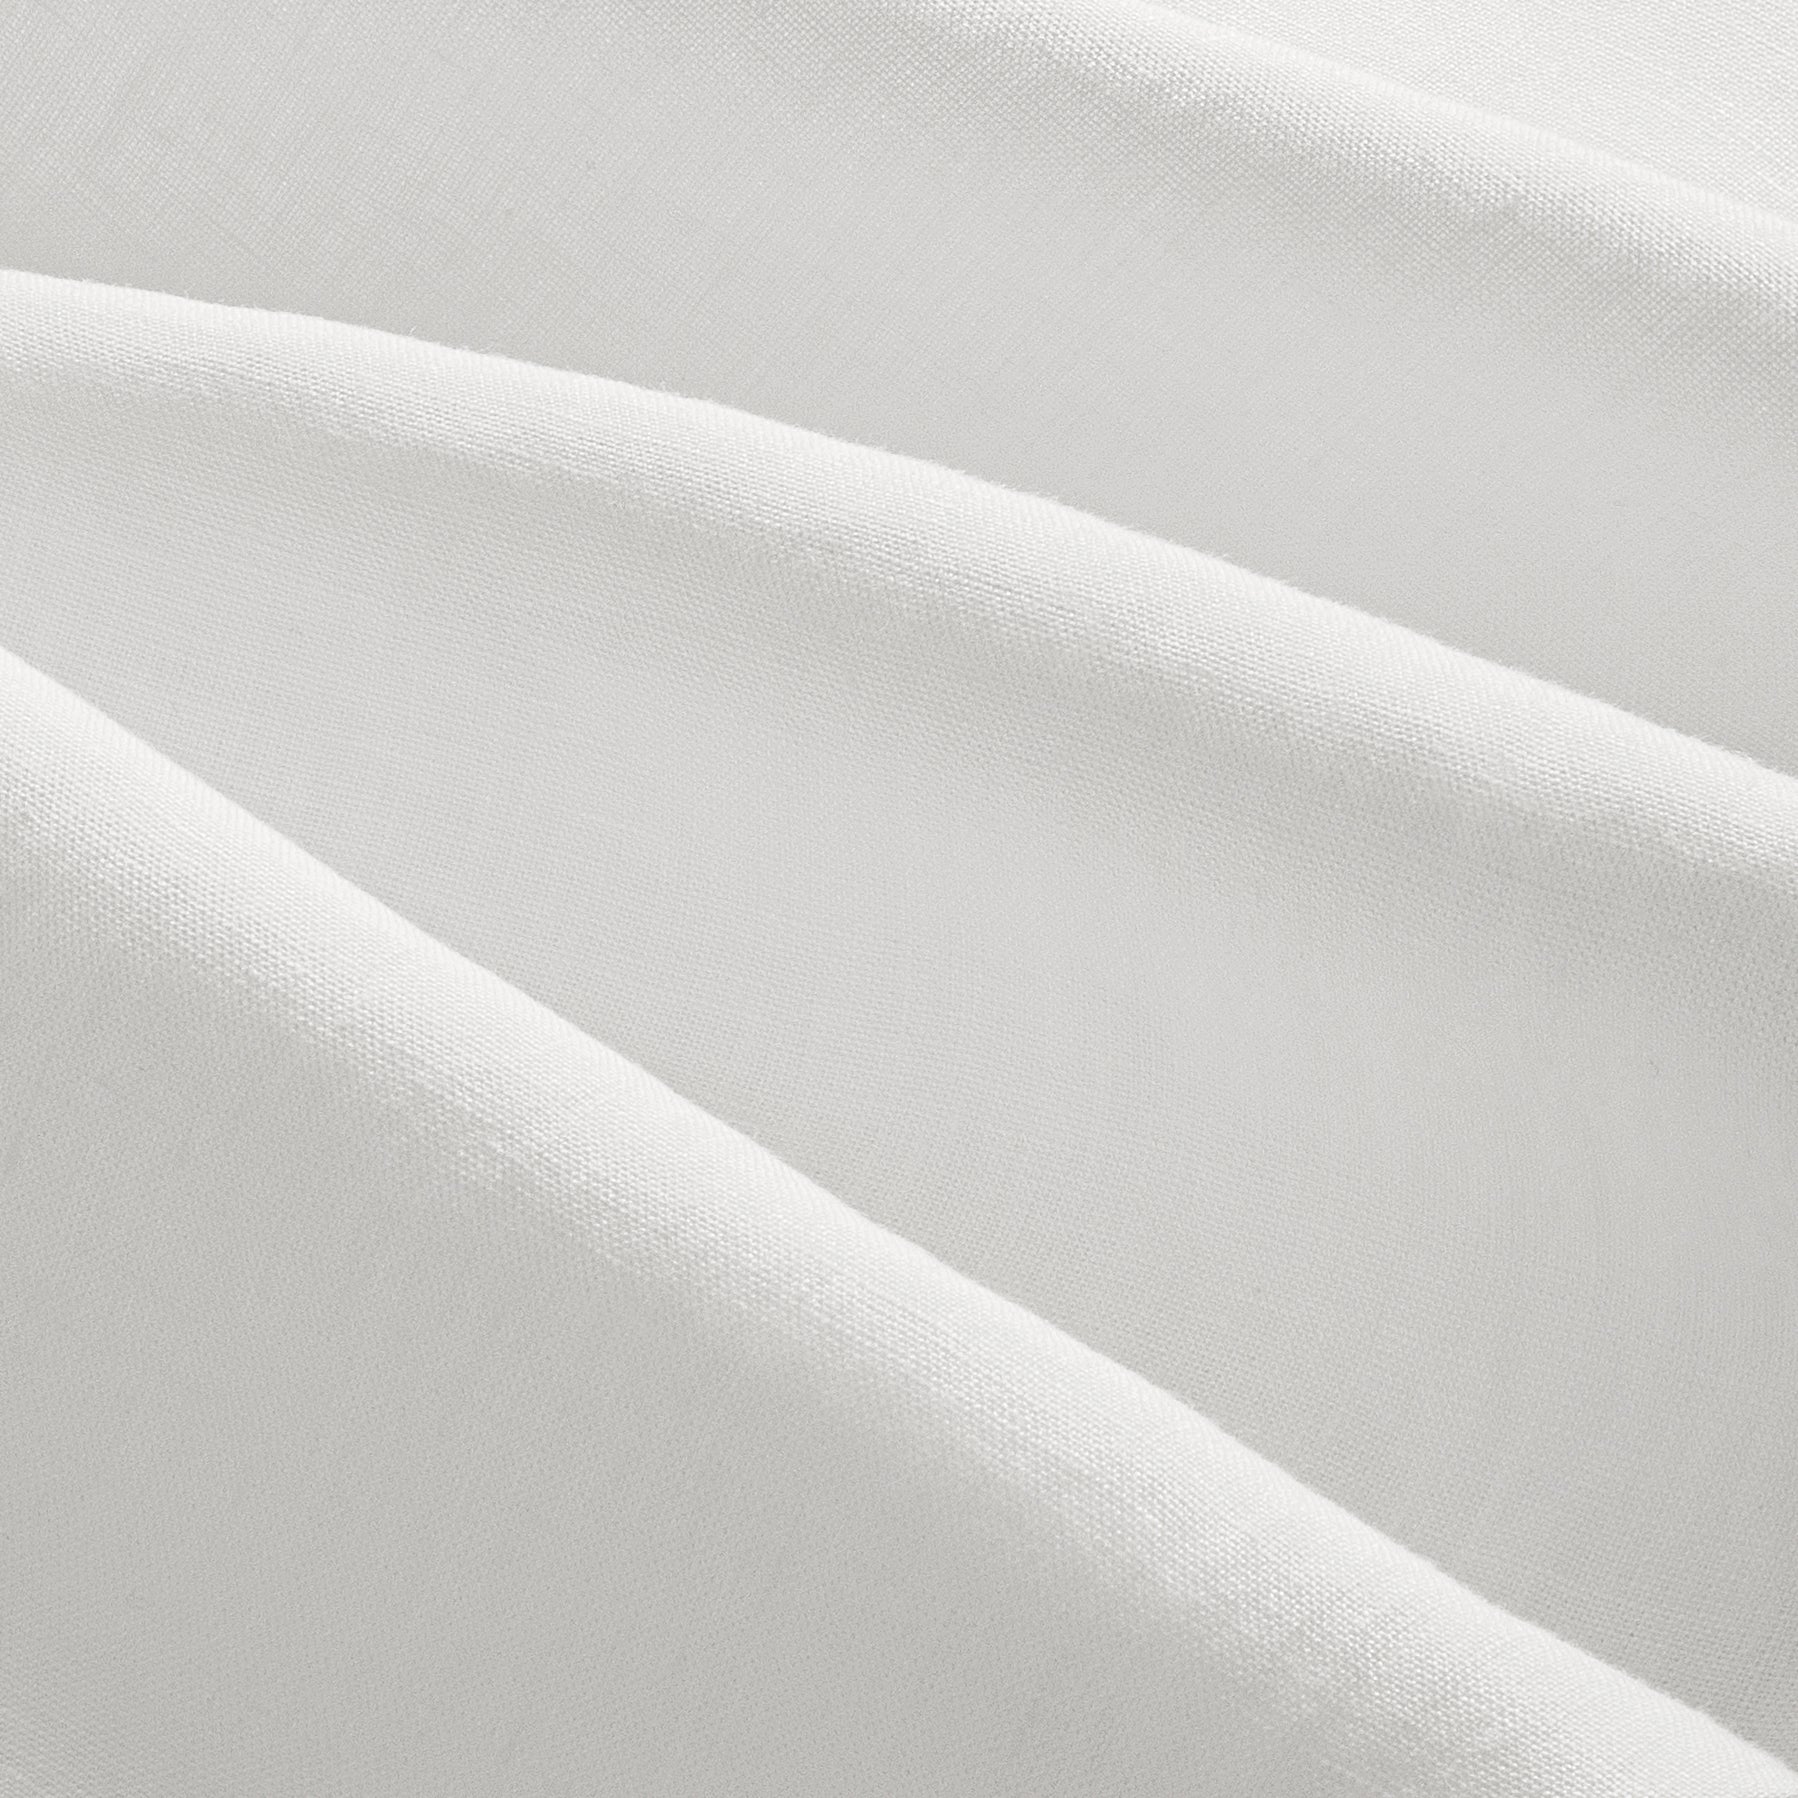 Close up details of Olivia natural soft white linen sheet set. Soft white linen bedsheet set close up.